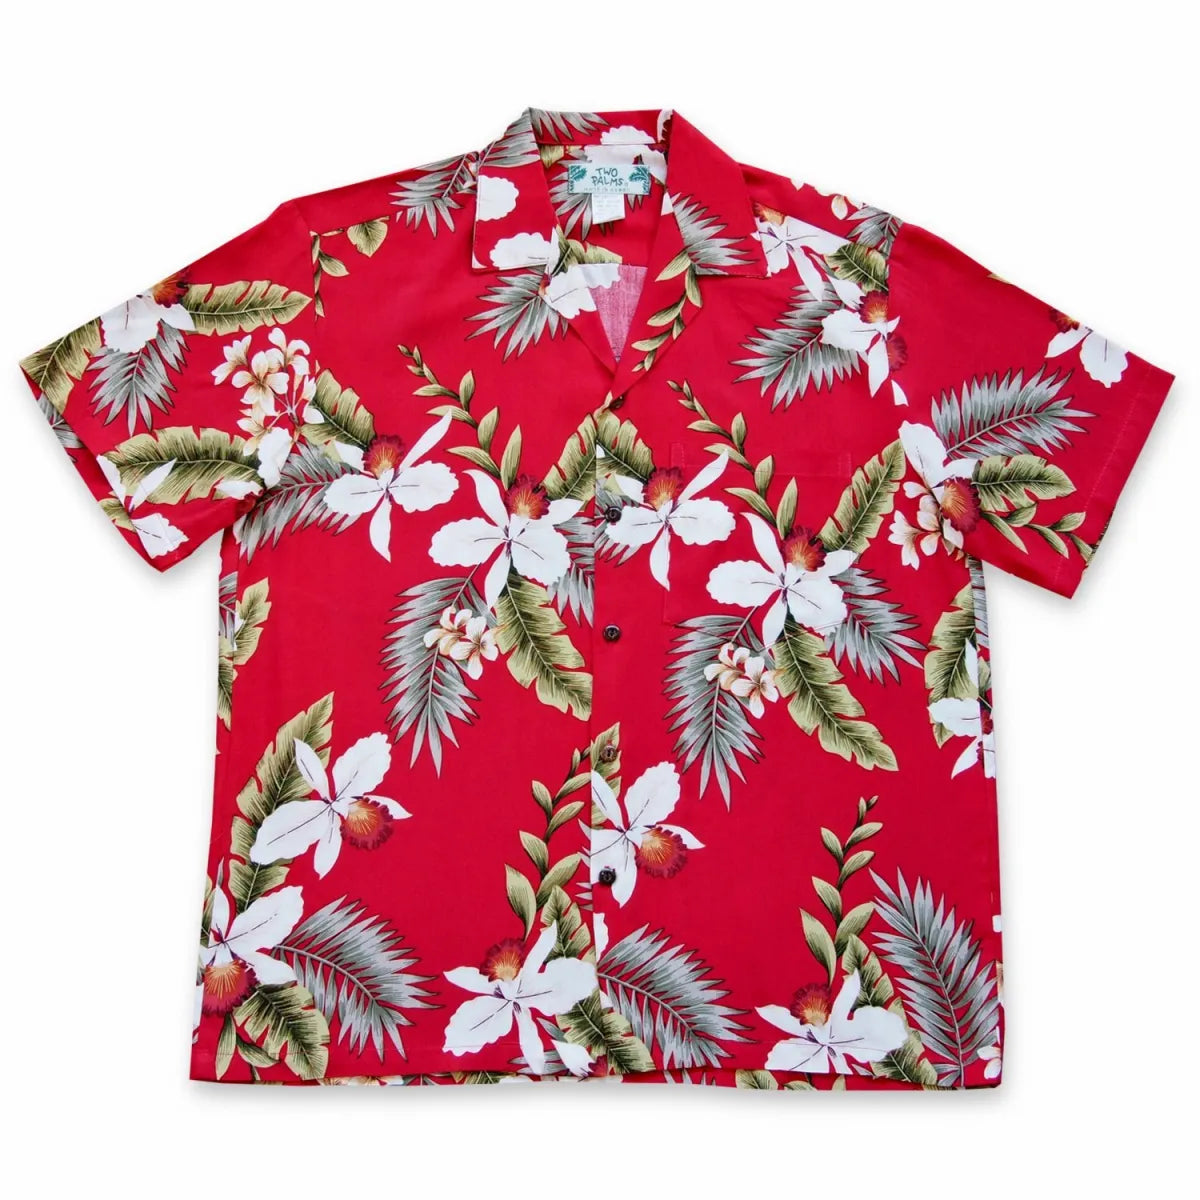 Volcanic red hawaiian rayon shirt